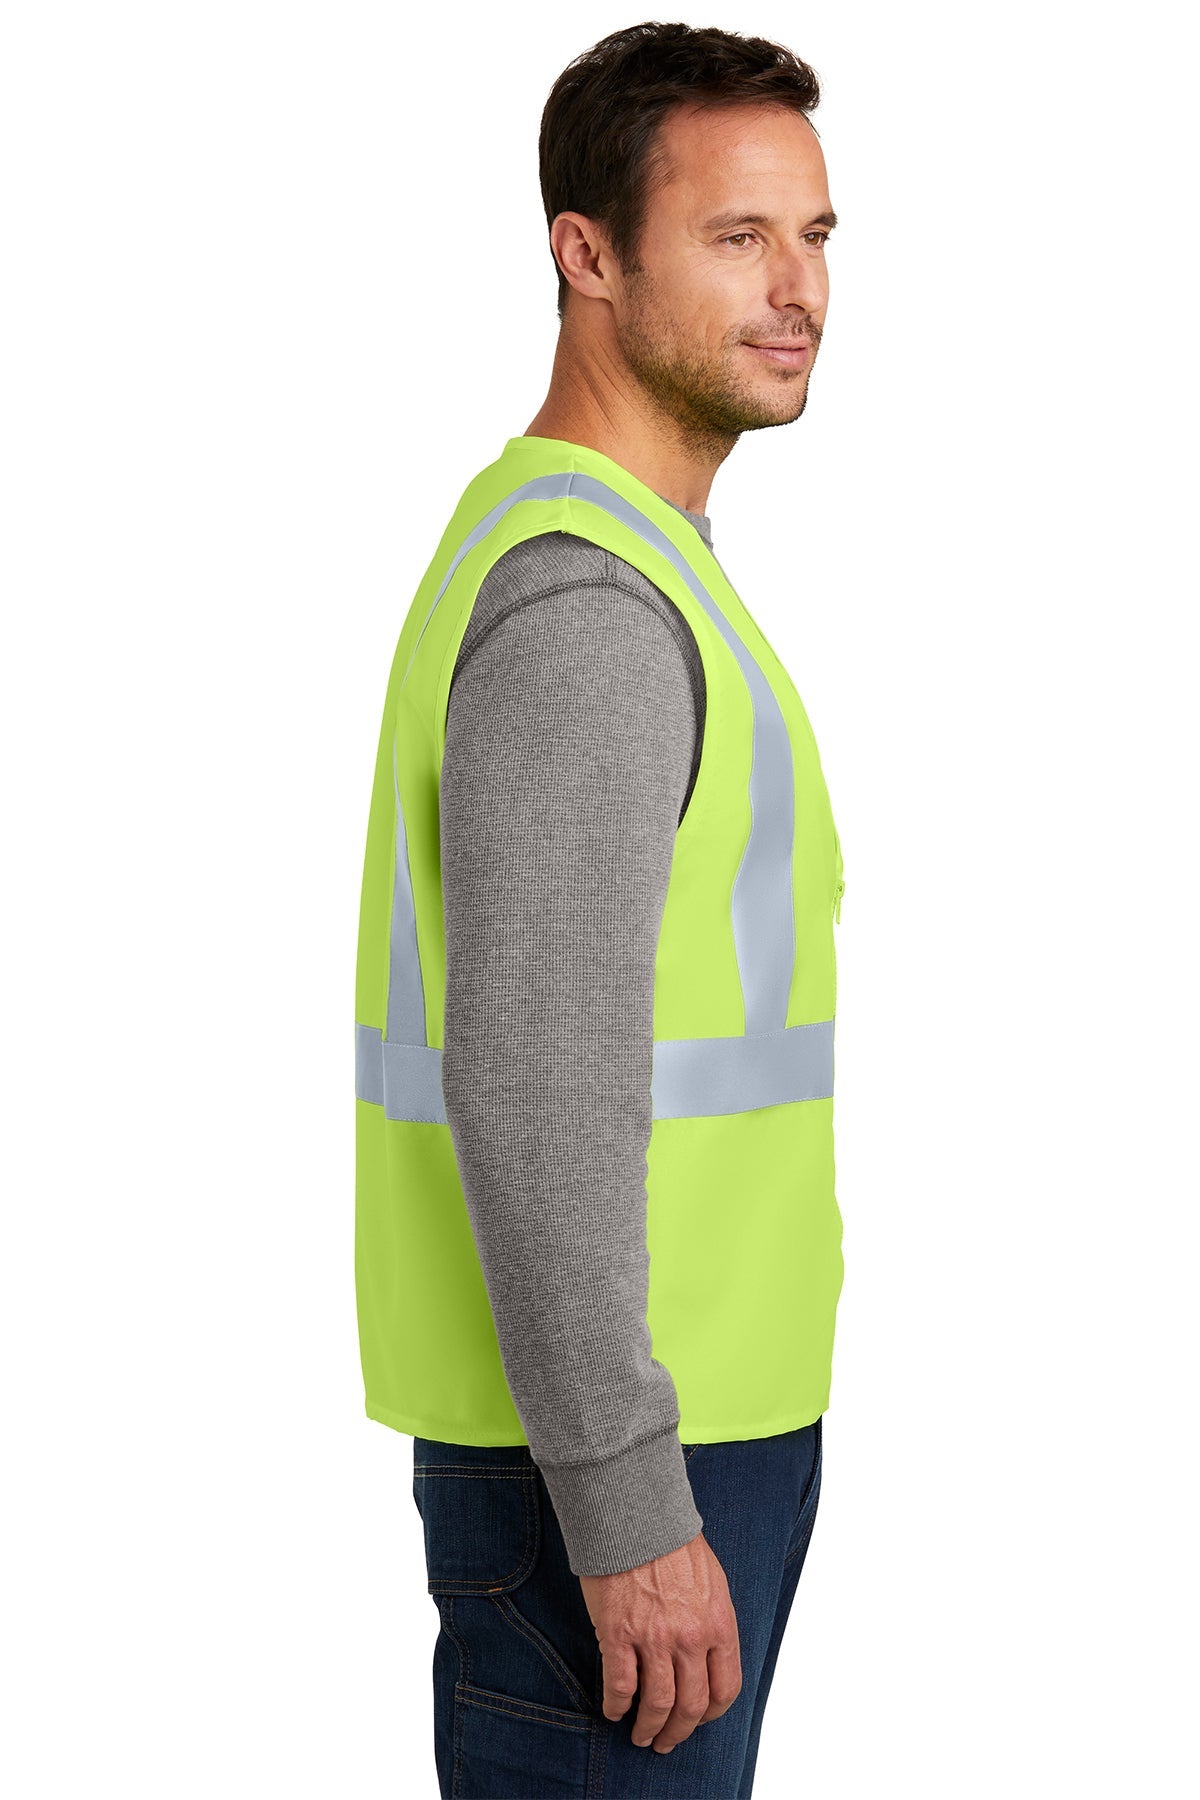 cornerstone_csv400 _safety yellow/ reflective_company_logo_jackets